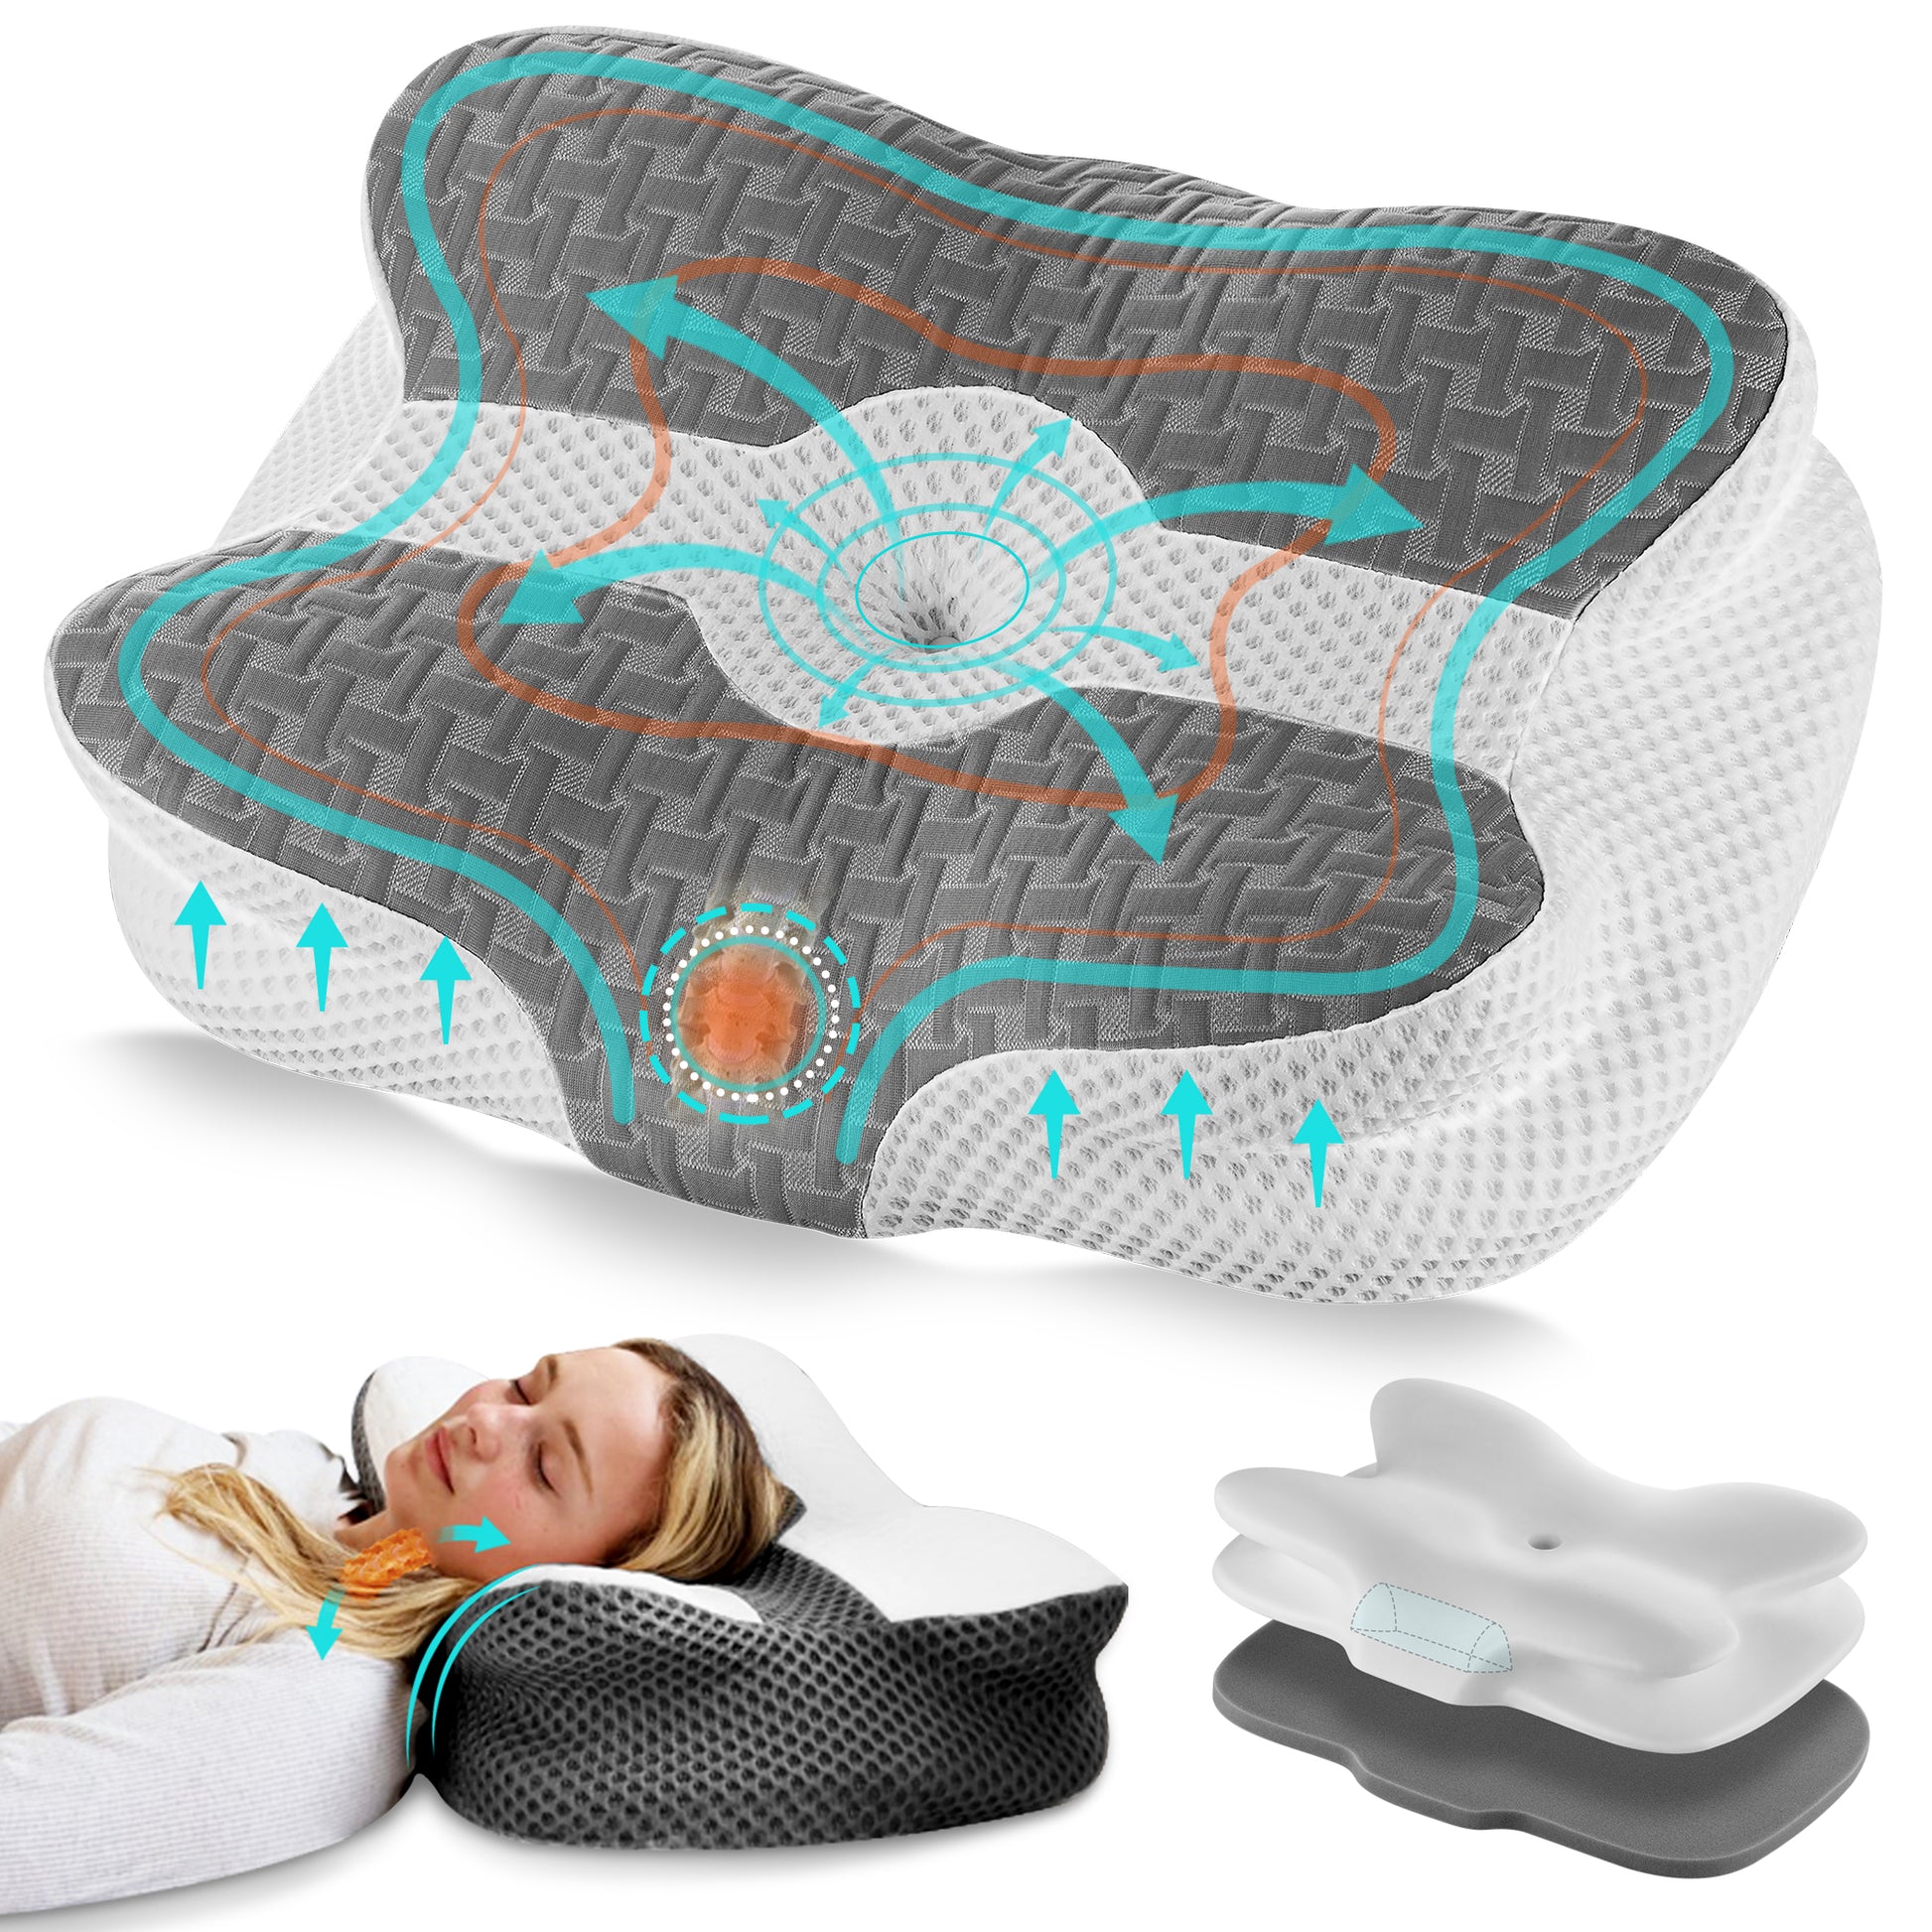 Elviros Adjustable Orthopedic Contour Memory Foam Pillow-19